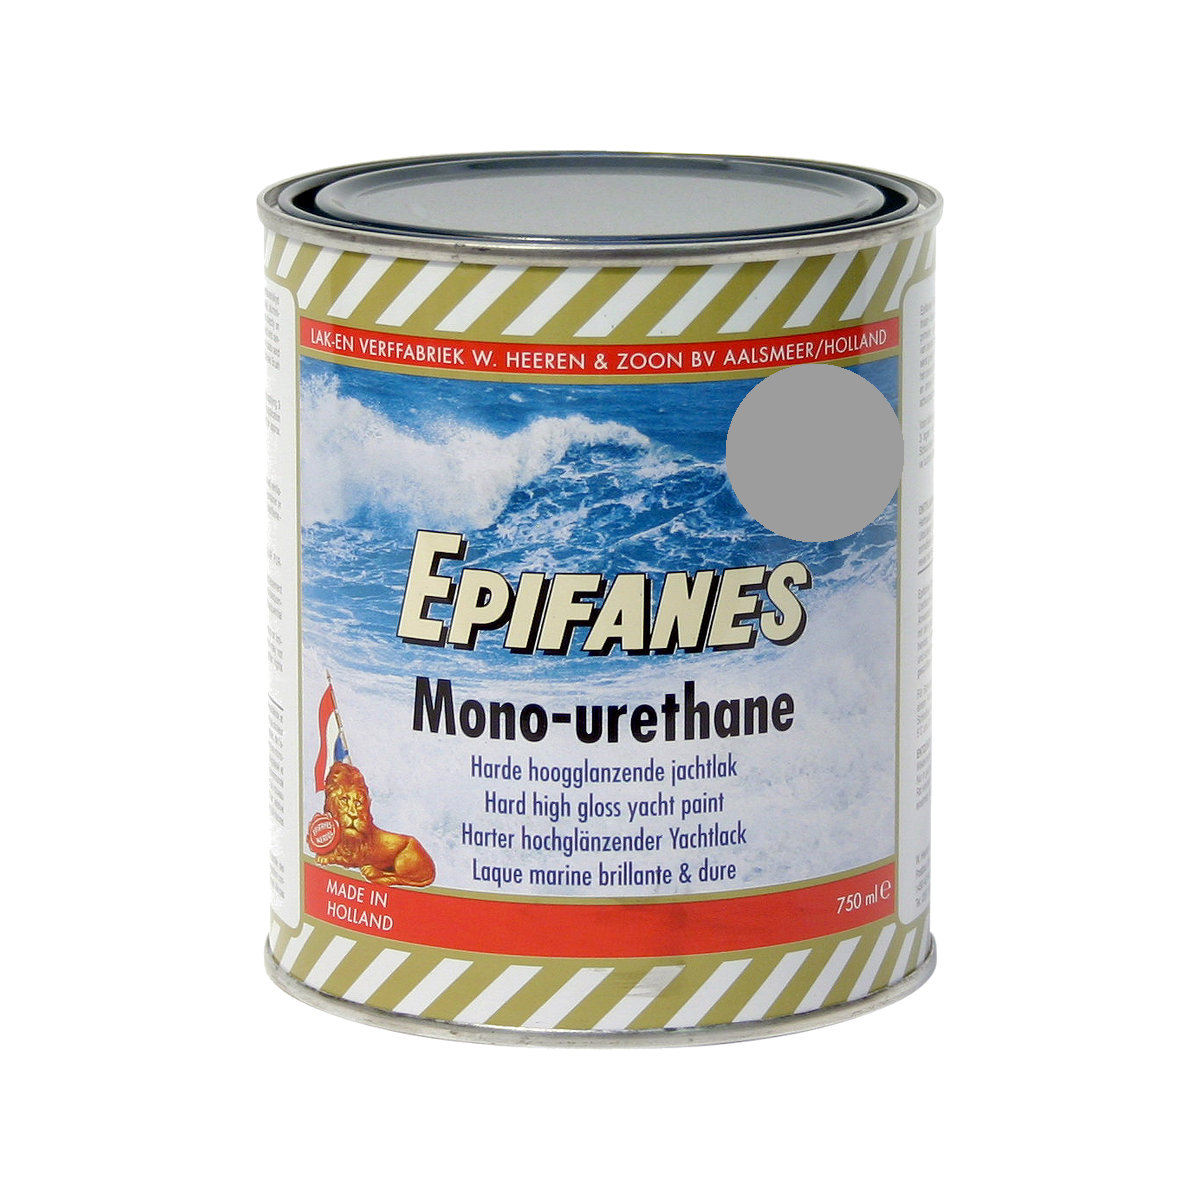 Epifanes mono-urethane jachtlak - middelgrijs 3212, 750ml